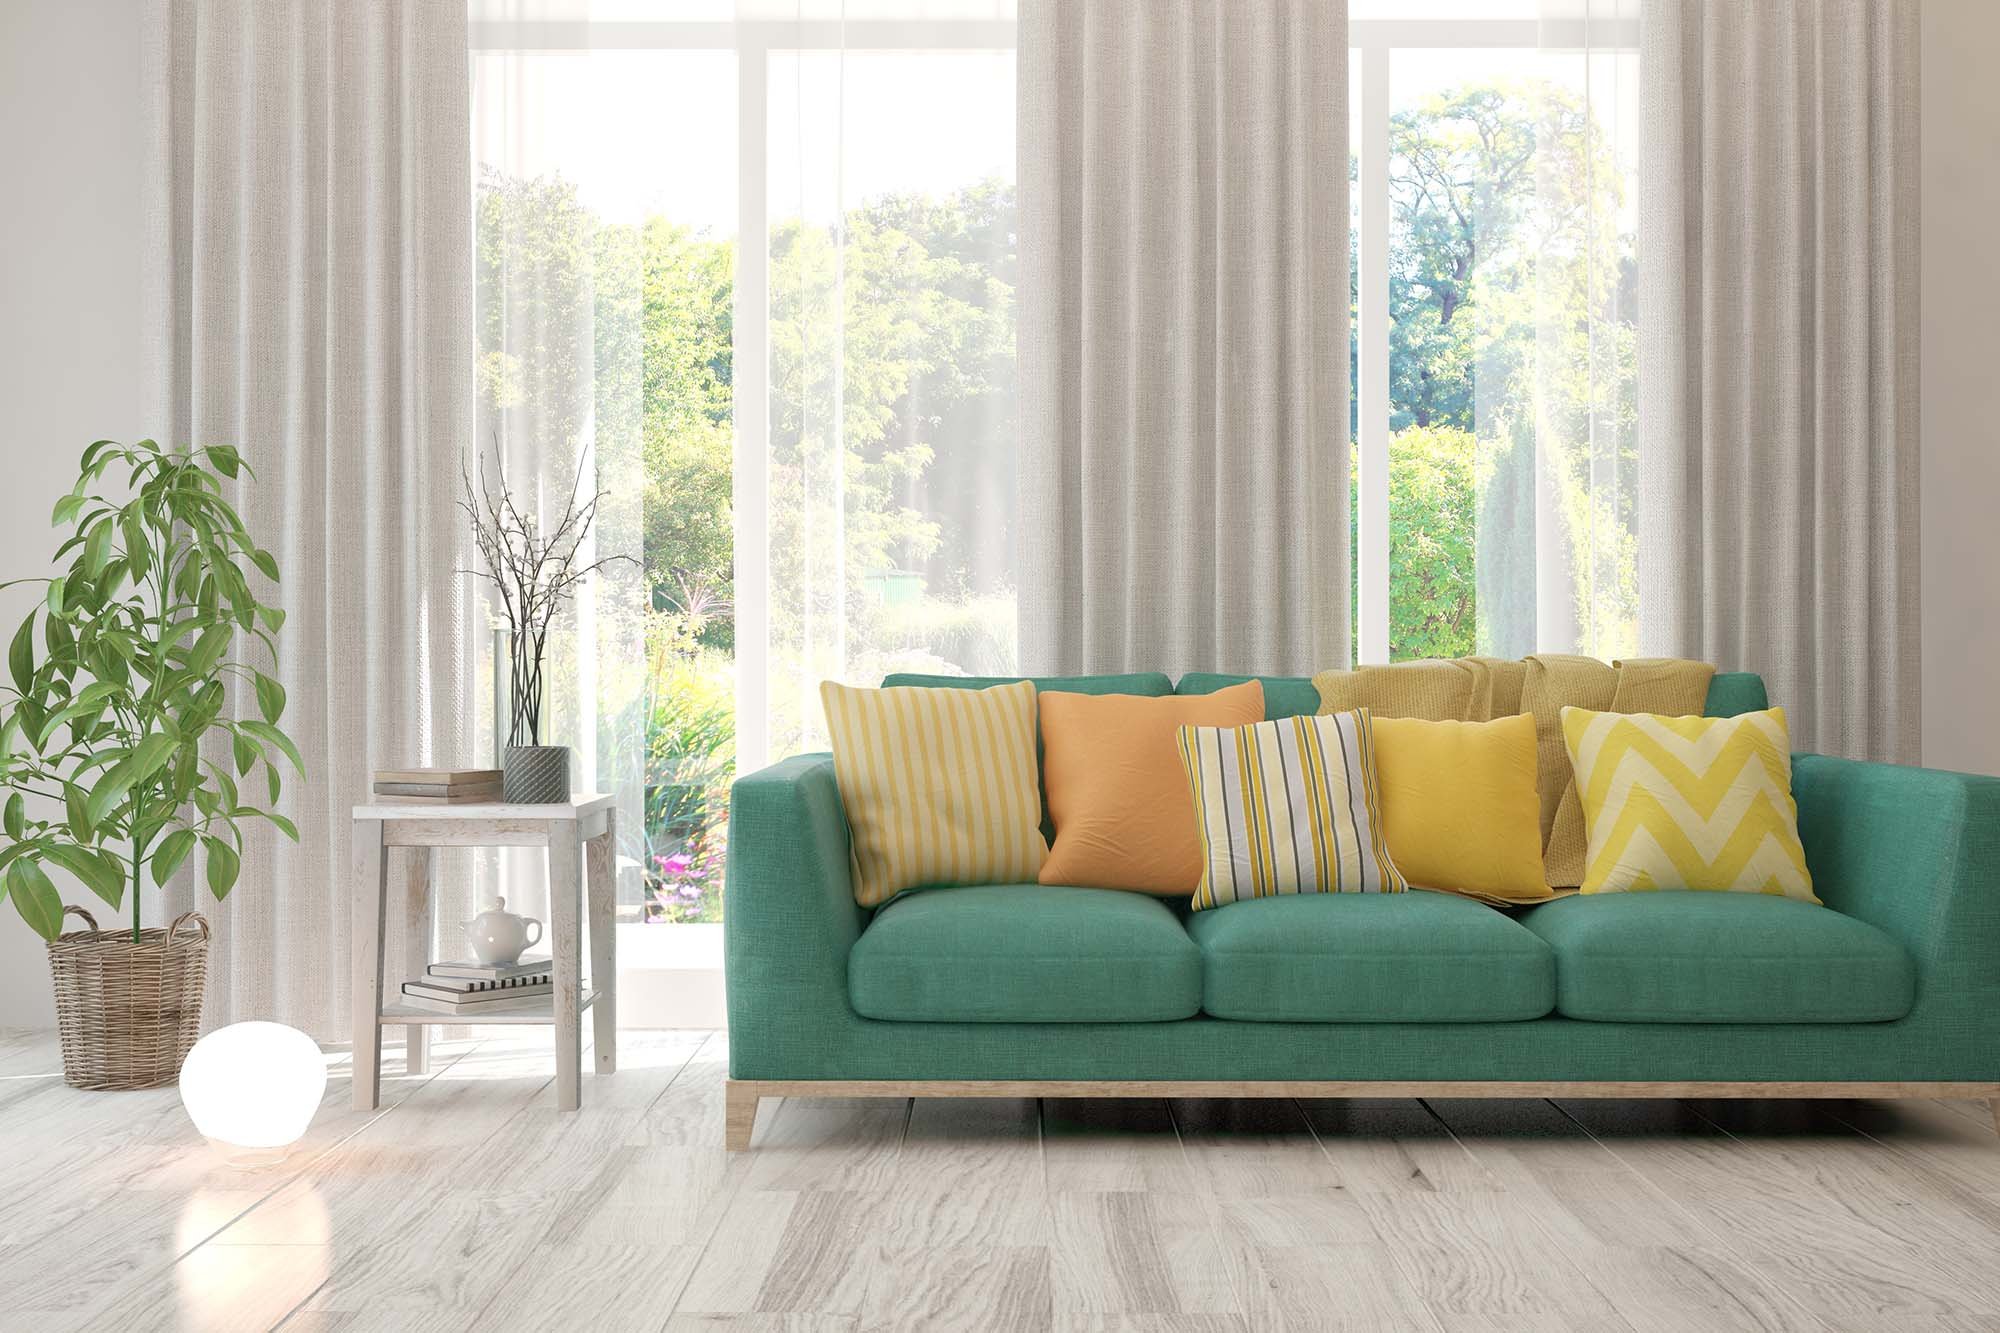 What cleaning method is best for luxury vinyl flooring?